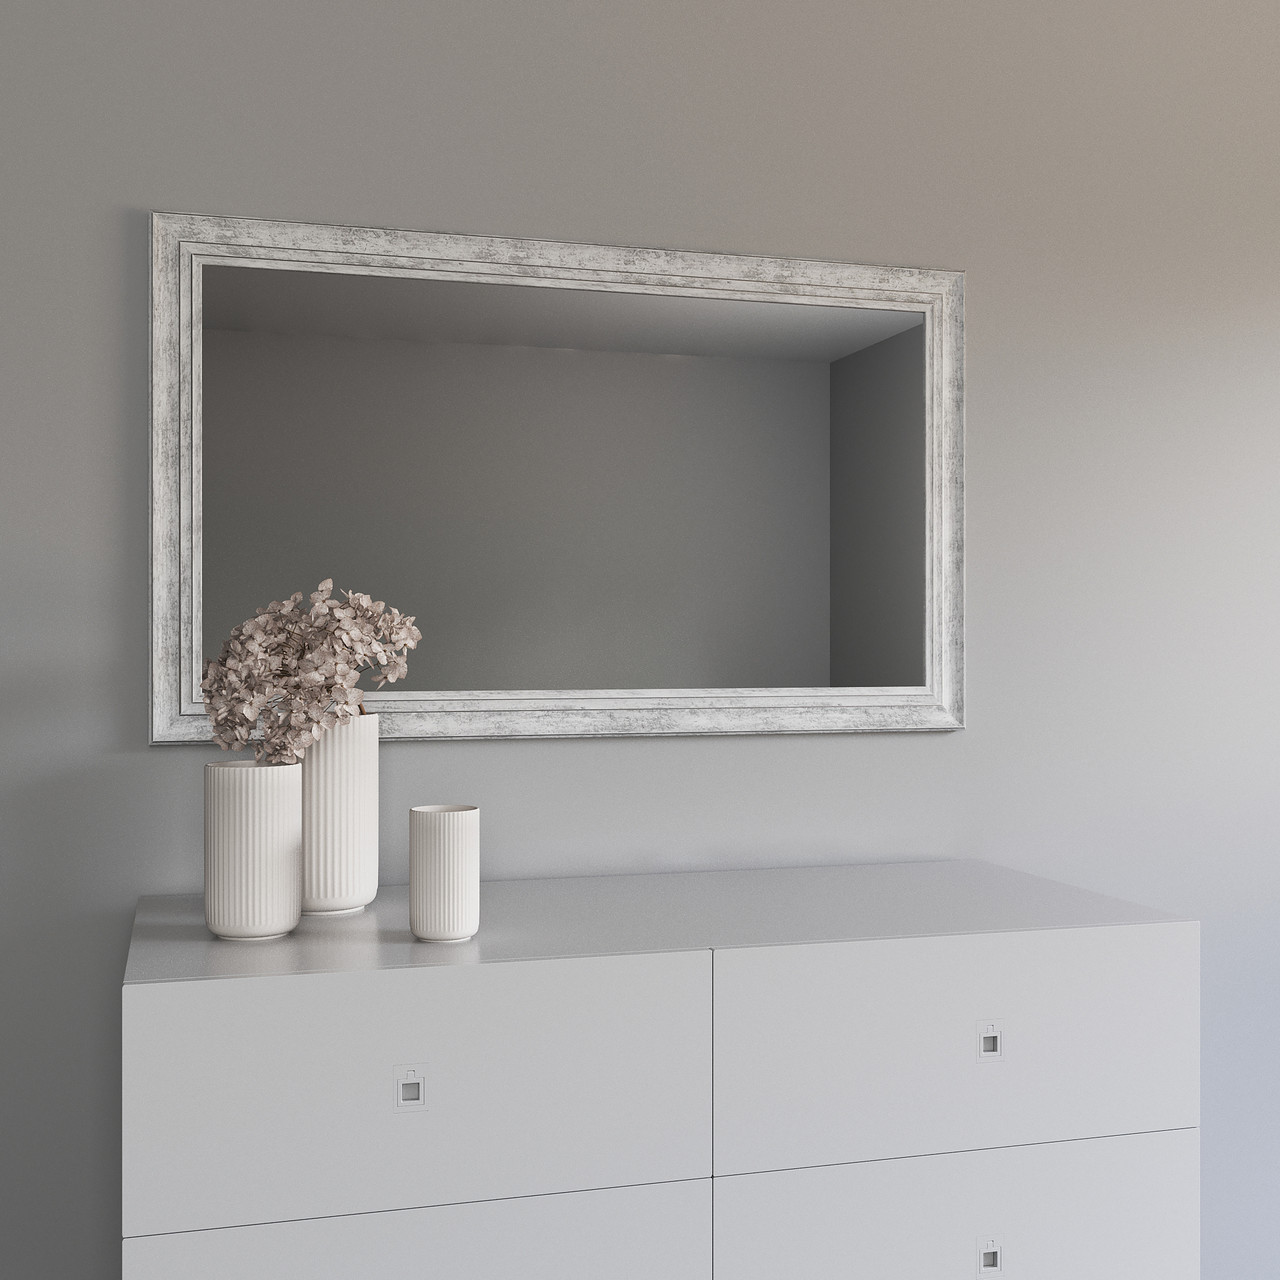 Дзеркало настінне в багеті 122х72 Біле з патиною срібла Black Mirror для масажного кабінету